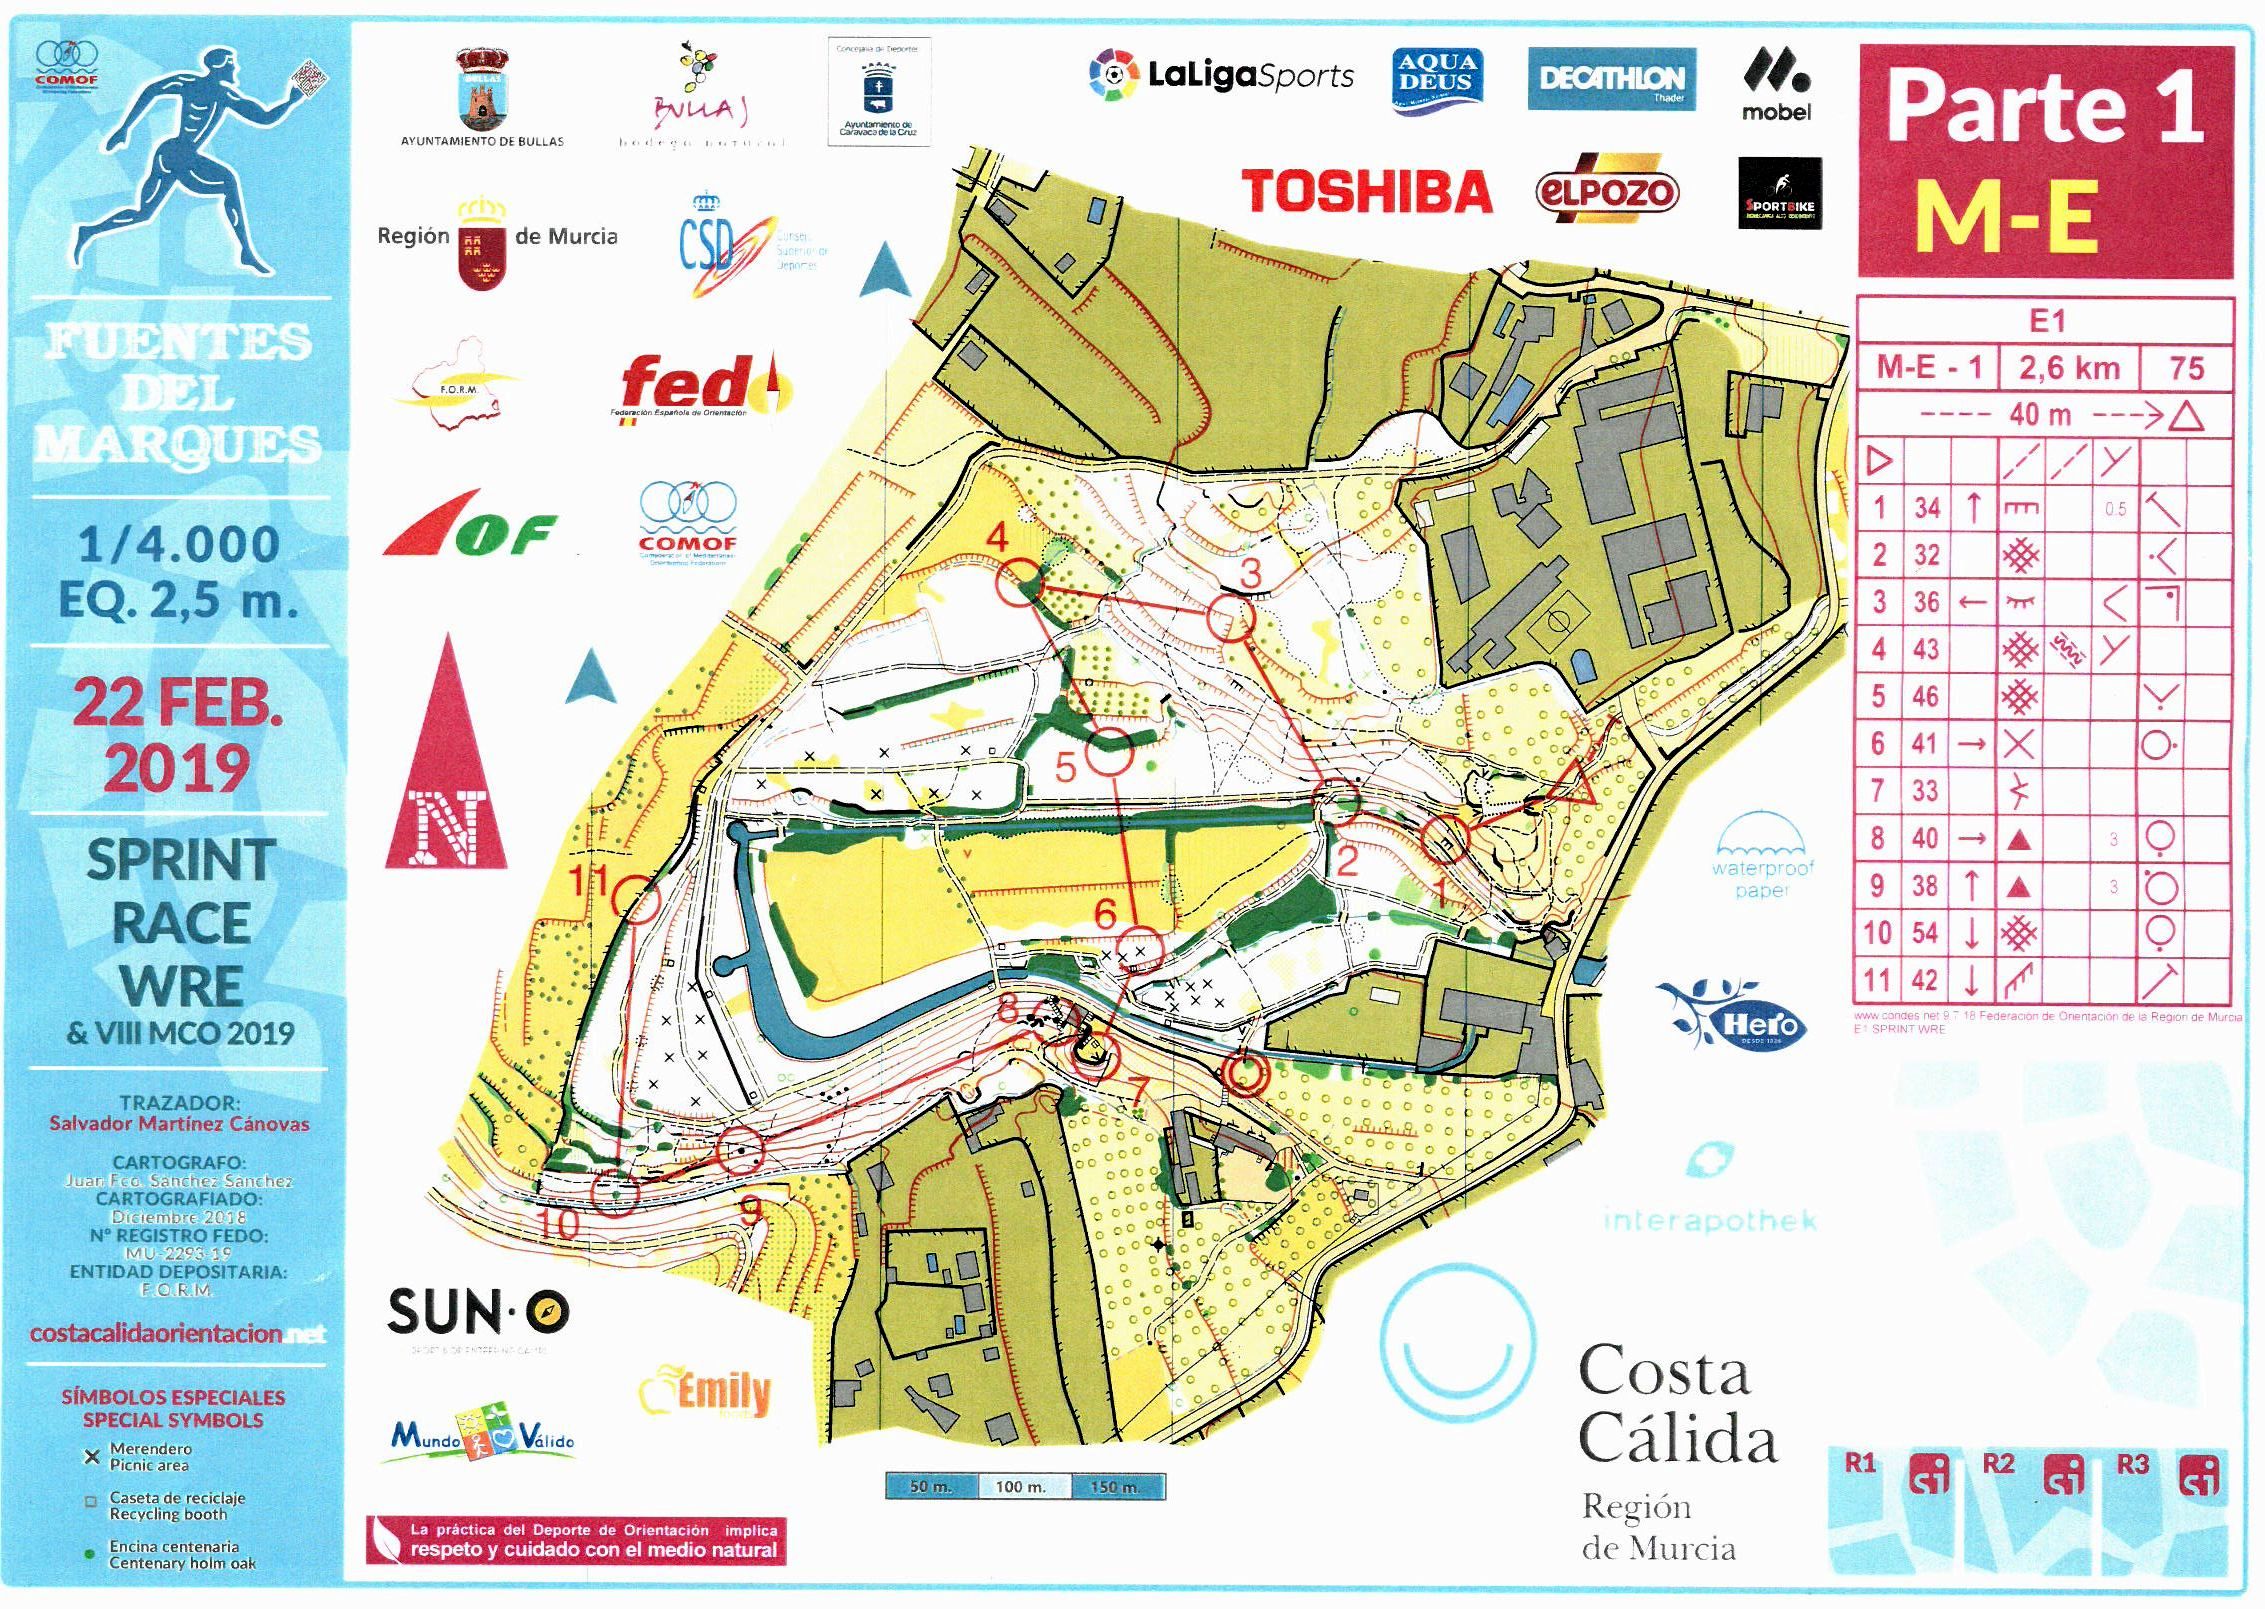 Costa Calida E1 - WRE sprint 1 (22.02.2019)